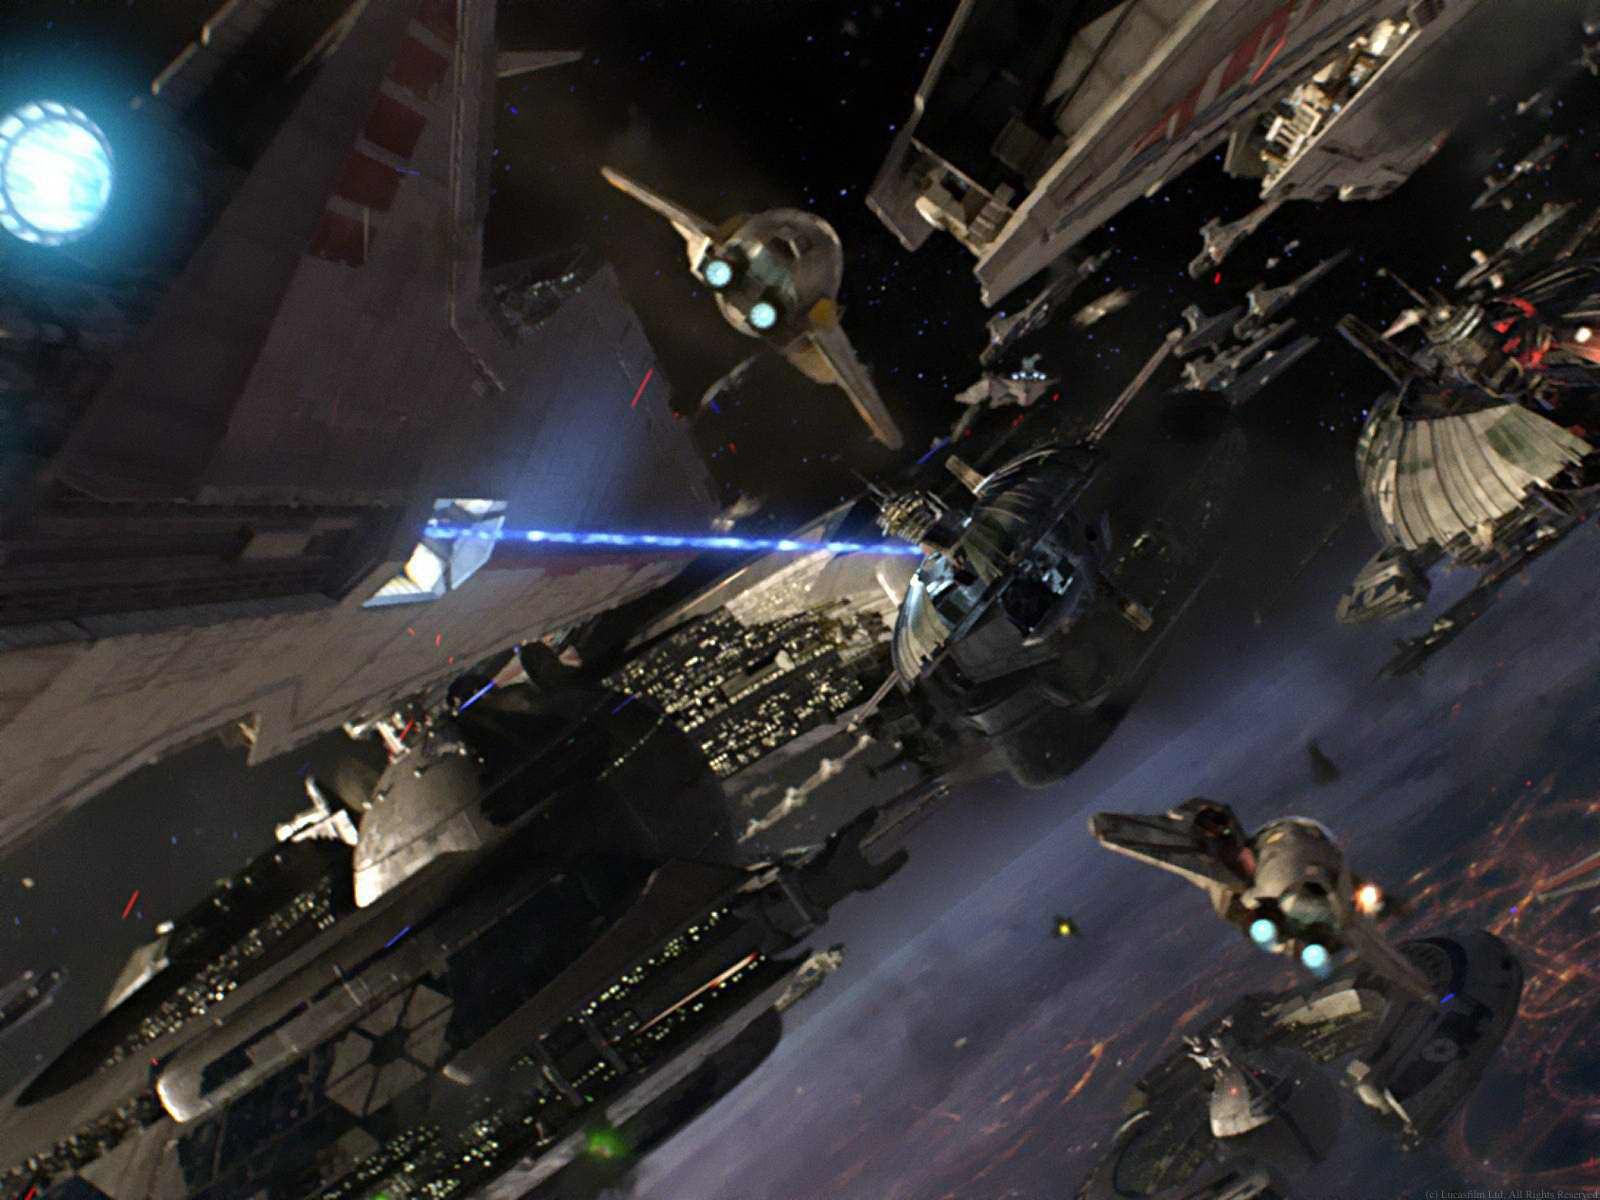 Battle over Coruscant. Star wars picture, Star wars ships, Star wars